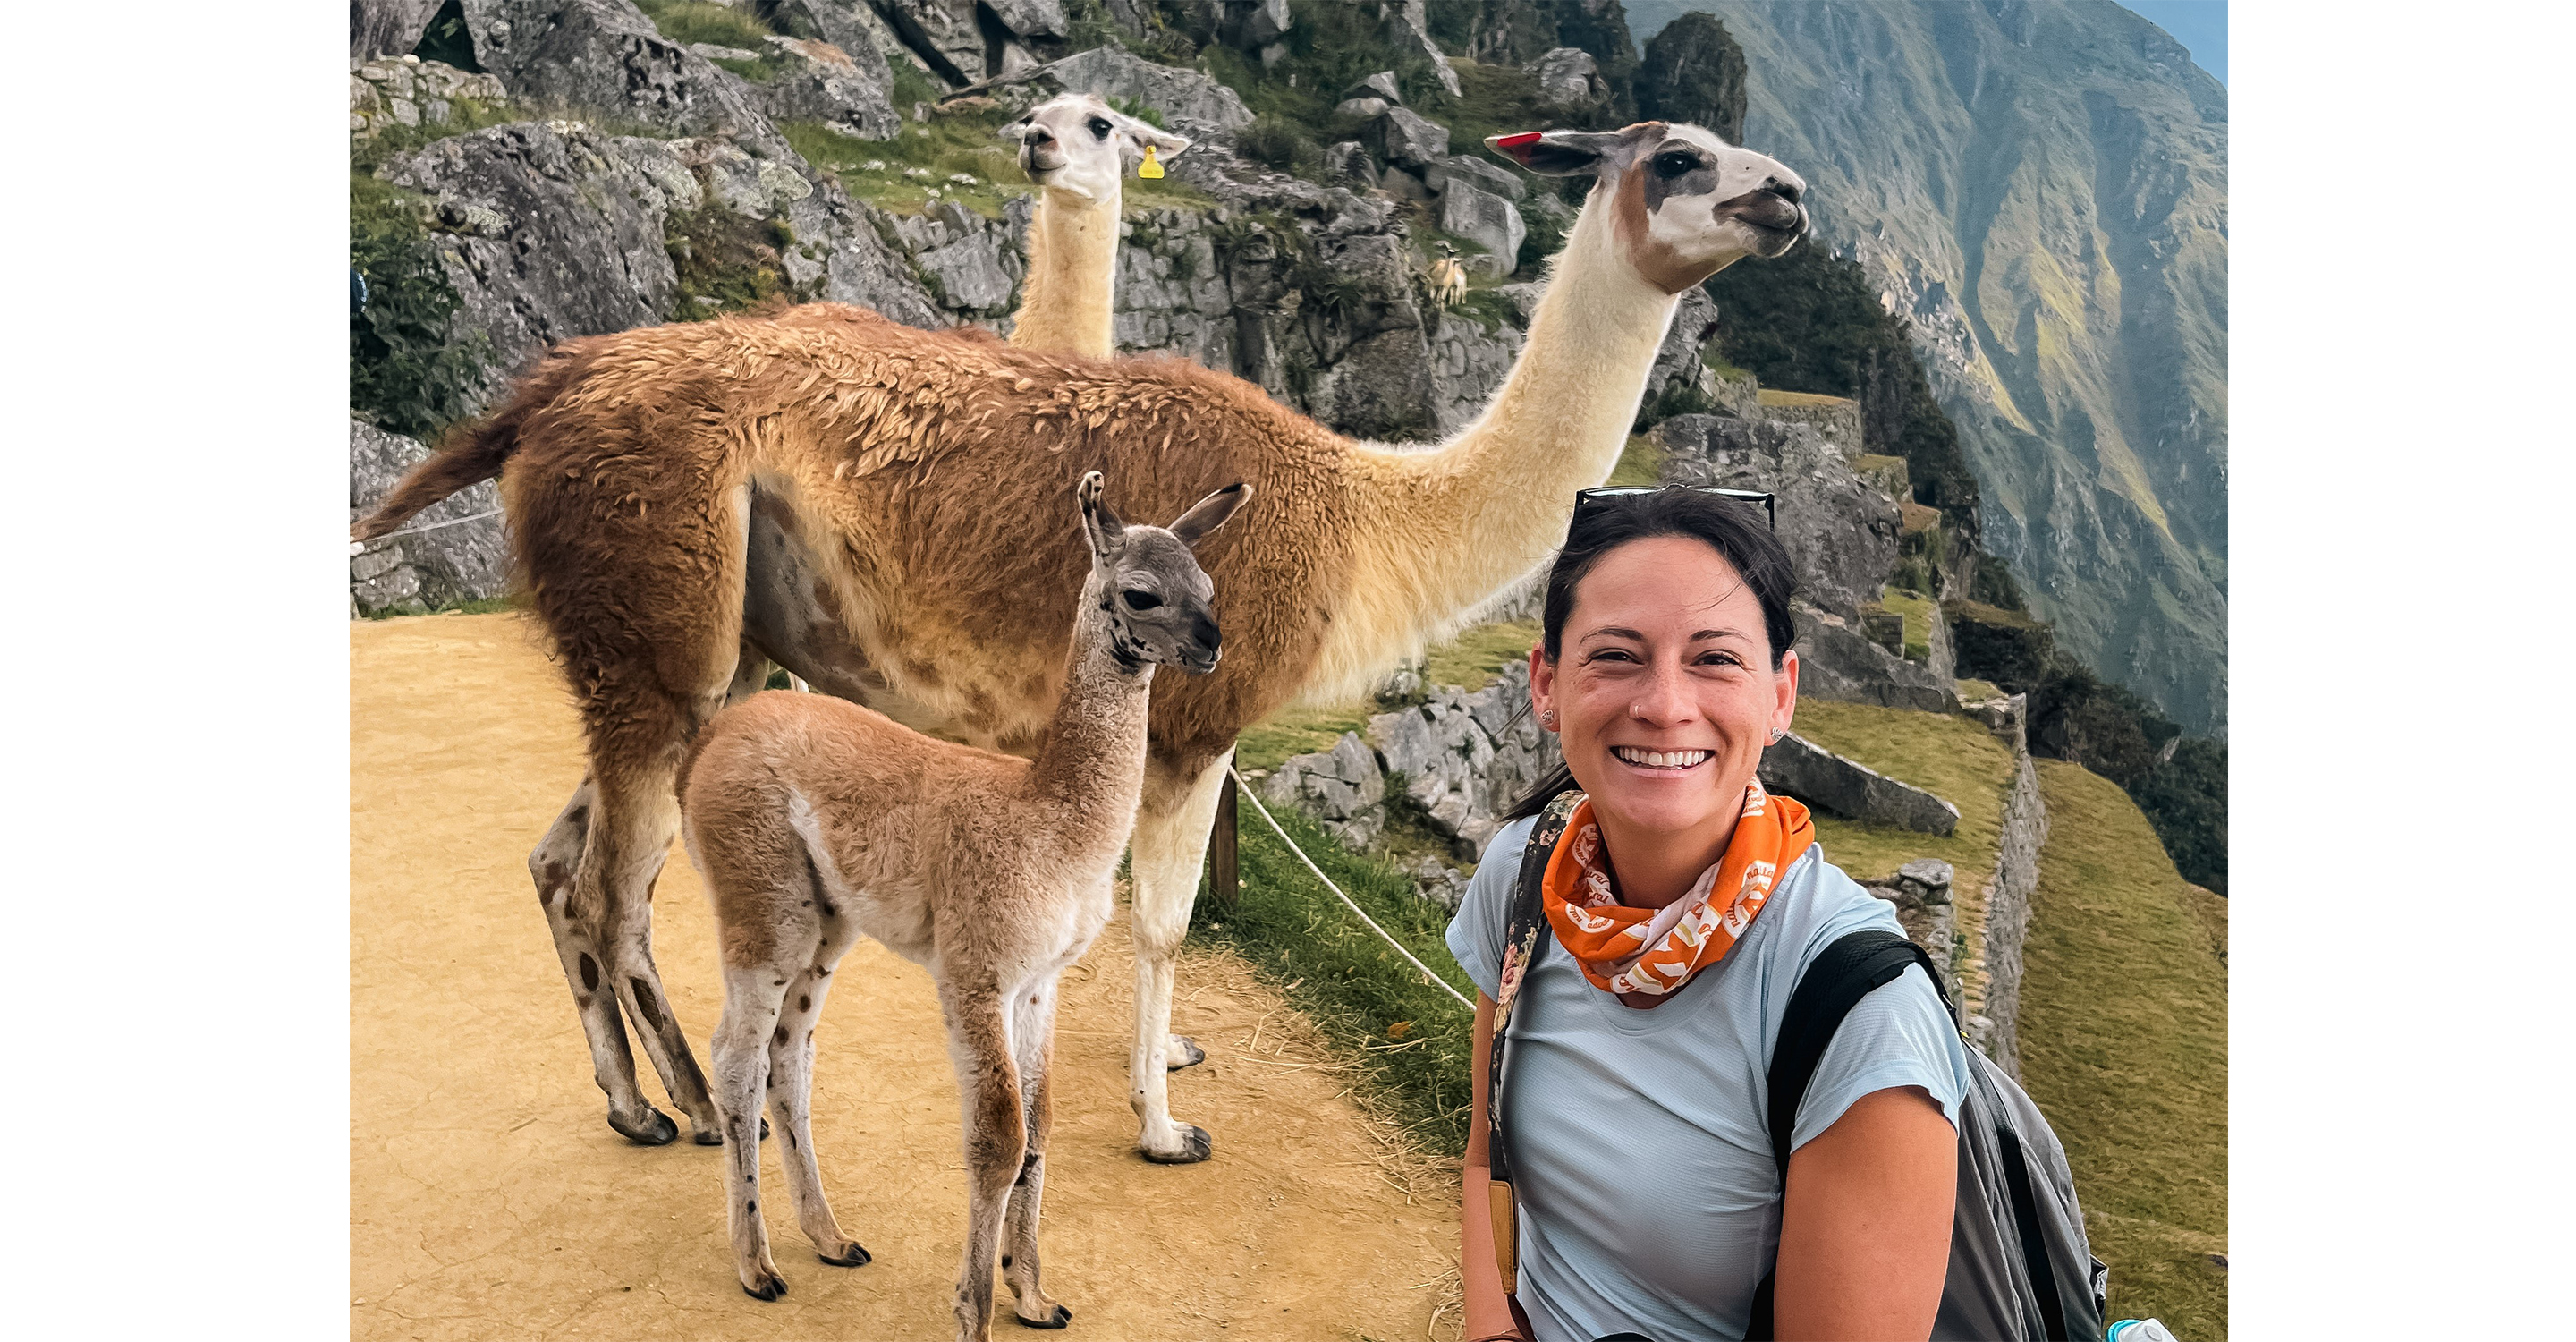 Llamas roaming the ancient Incan citadel of Machu Picchu in Peru.